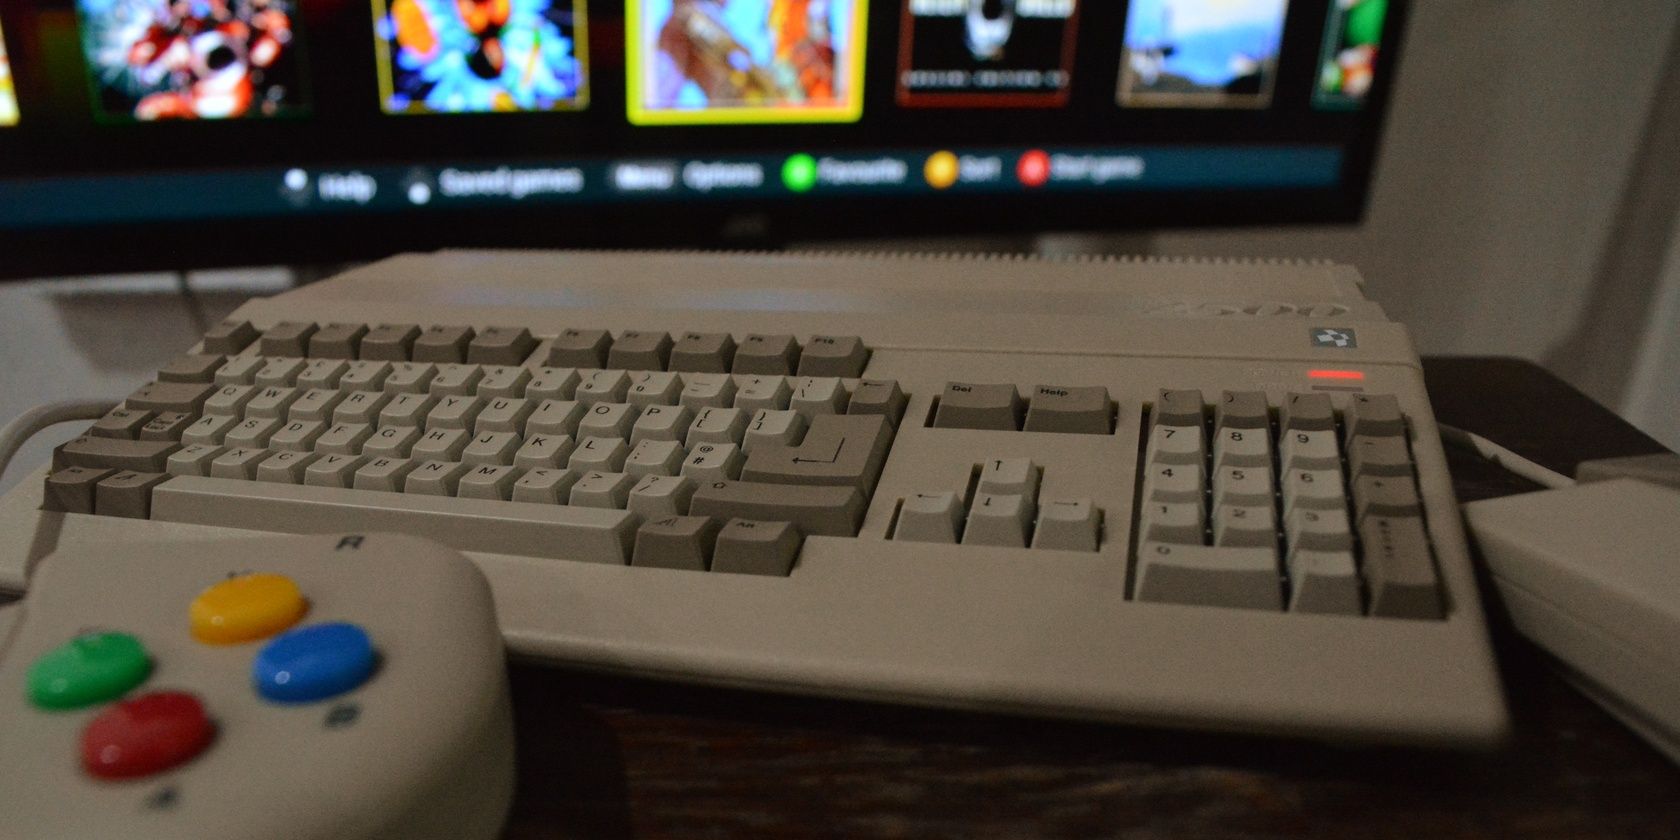 A500 Mini Amiga emulation system